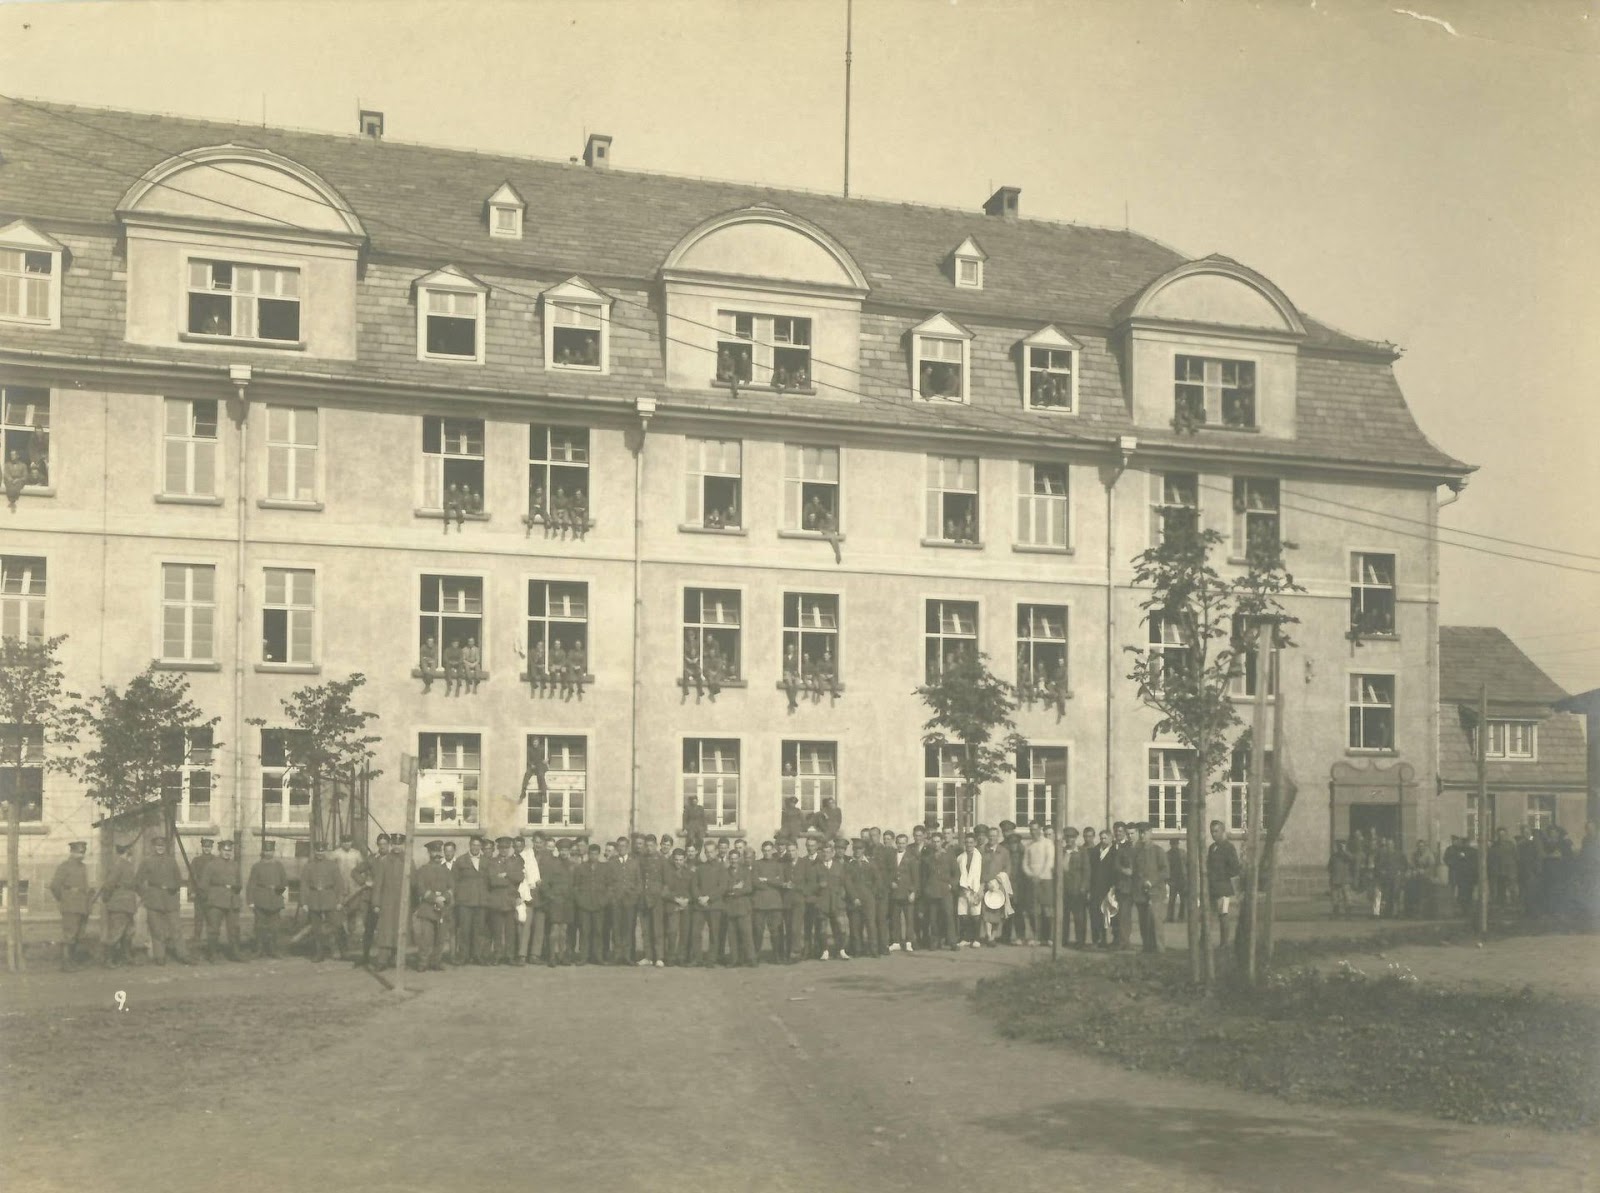 escape POW camp at holzminden